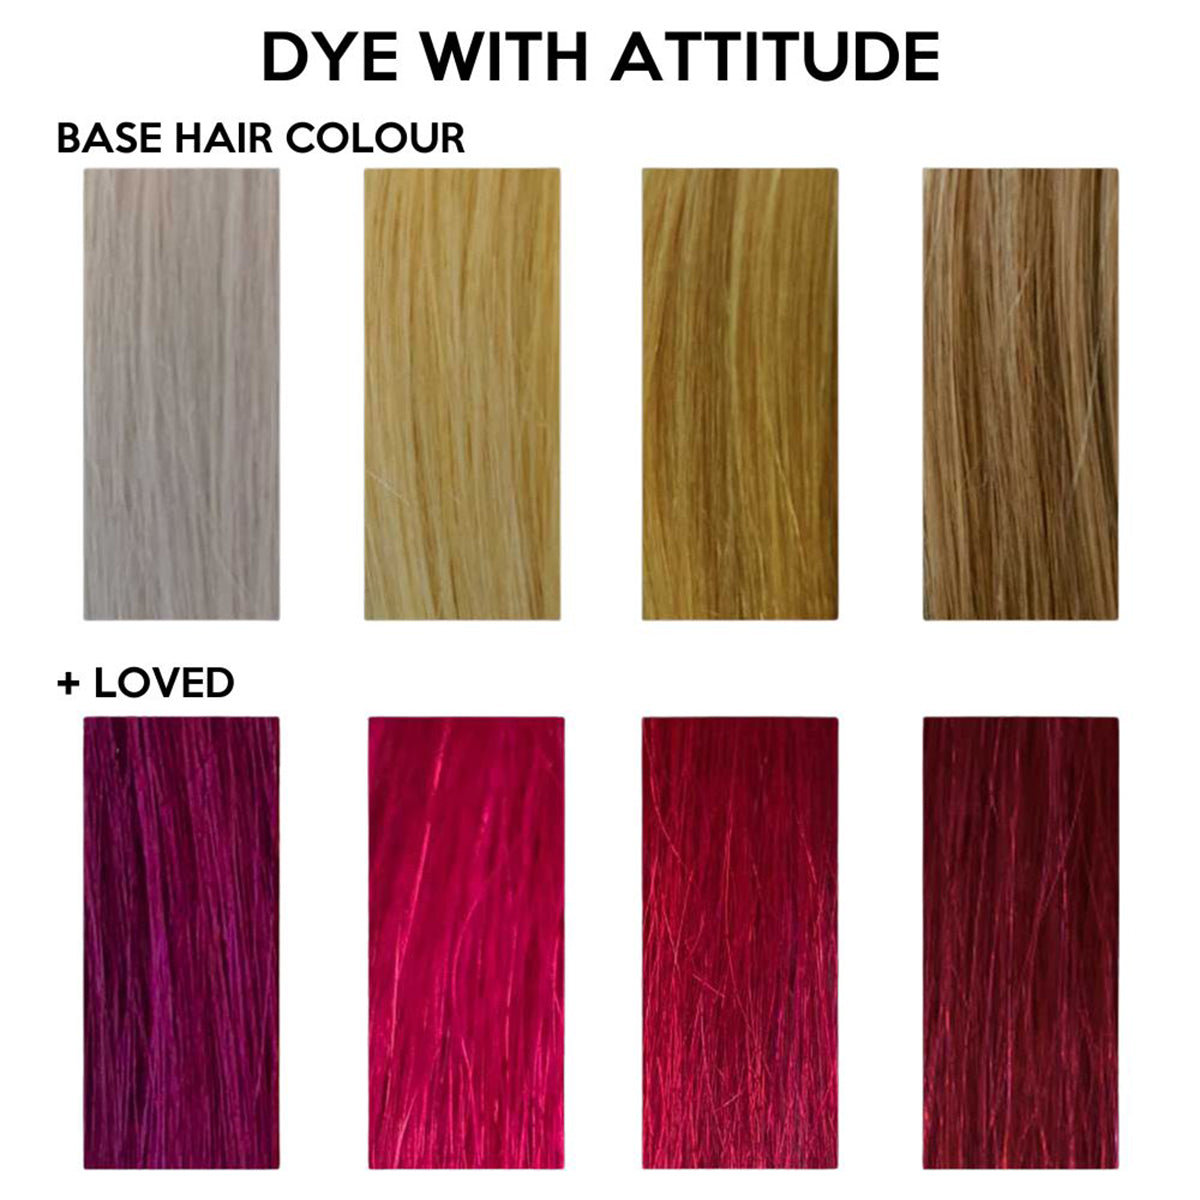 LOVED PINK - Attitude Hair Dye - 135ml